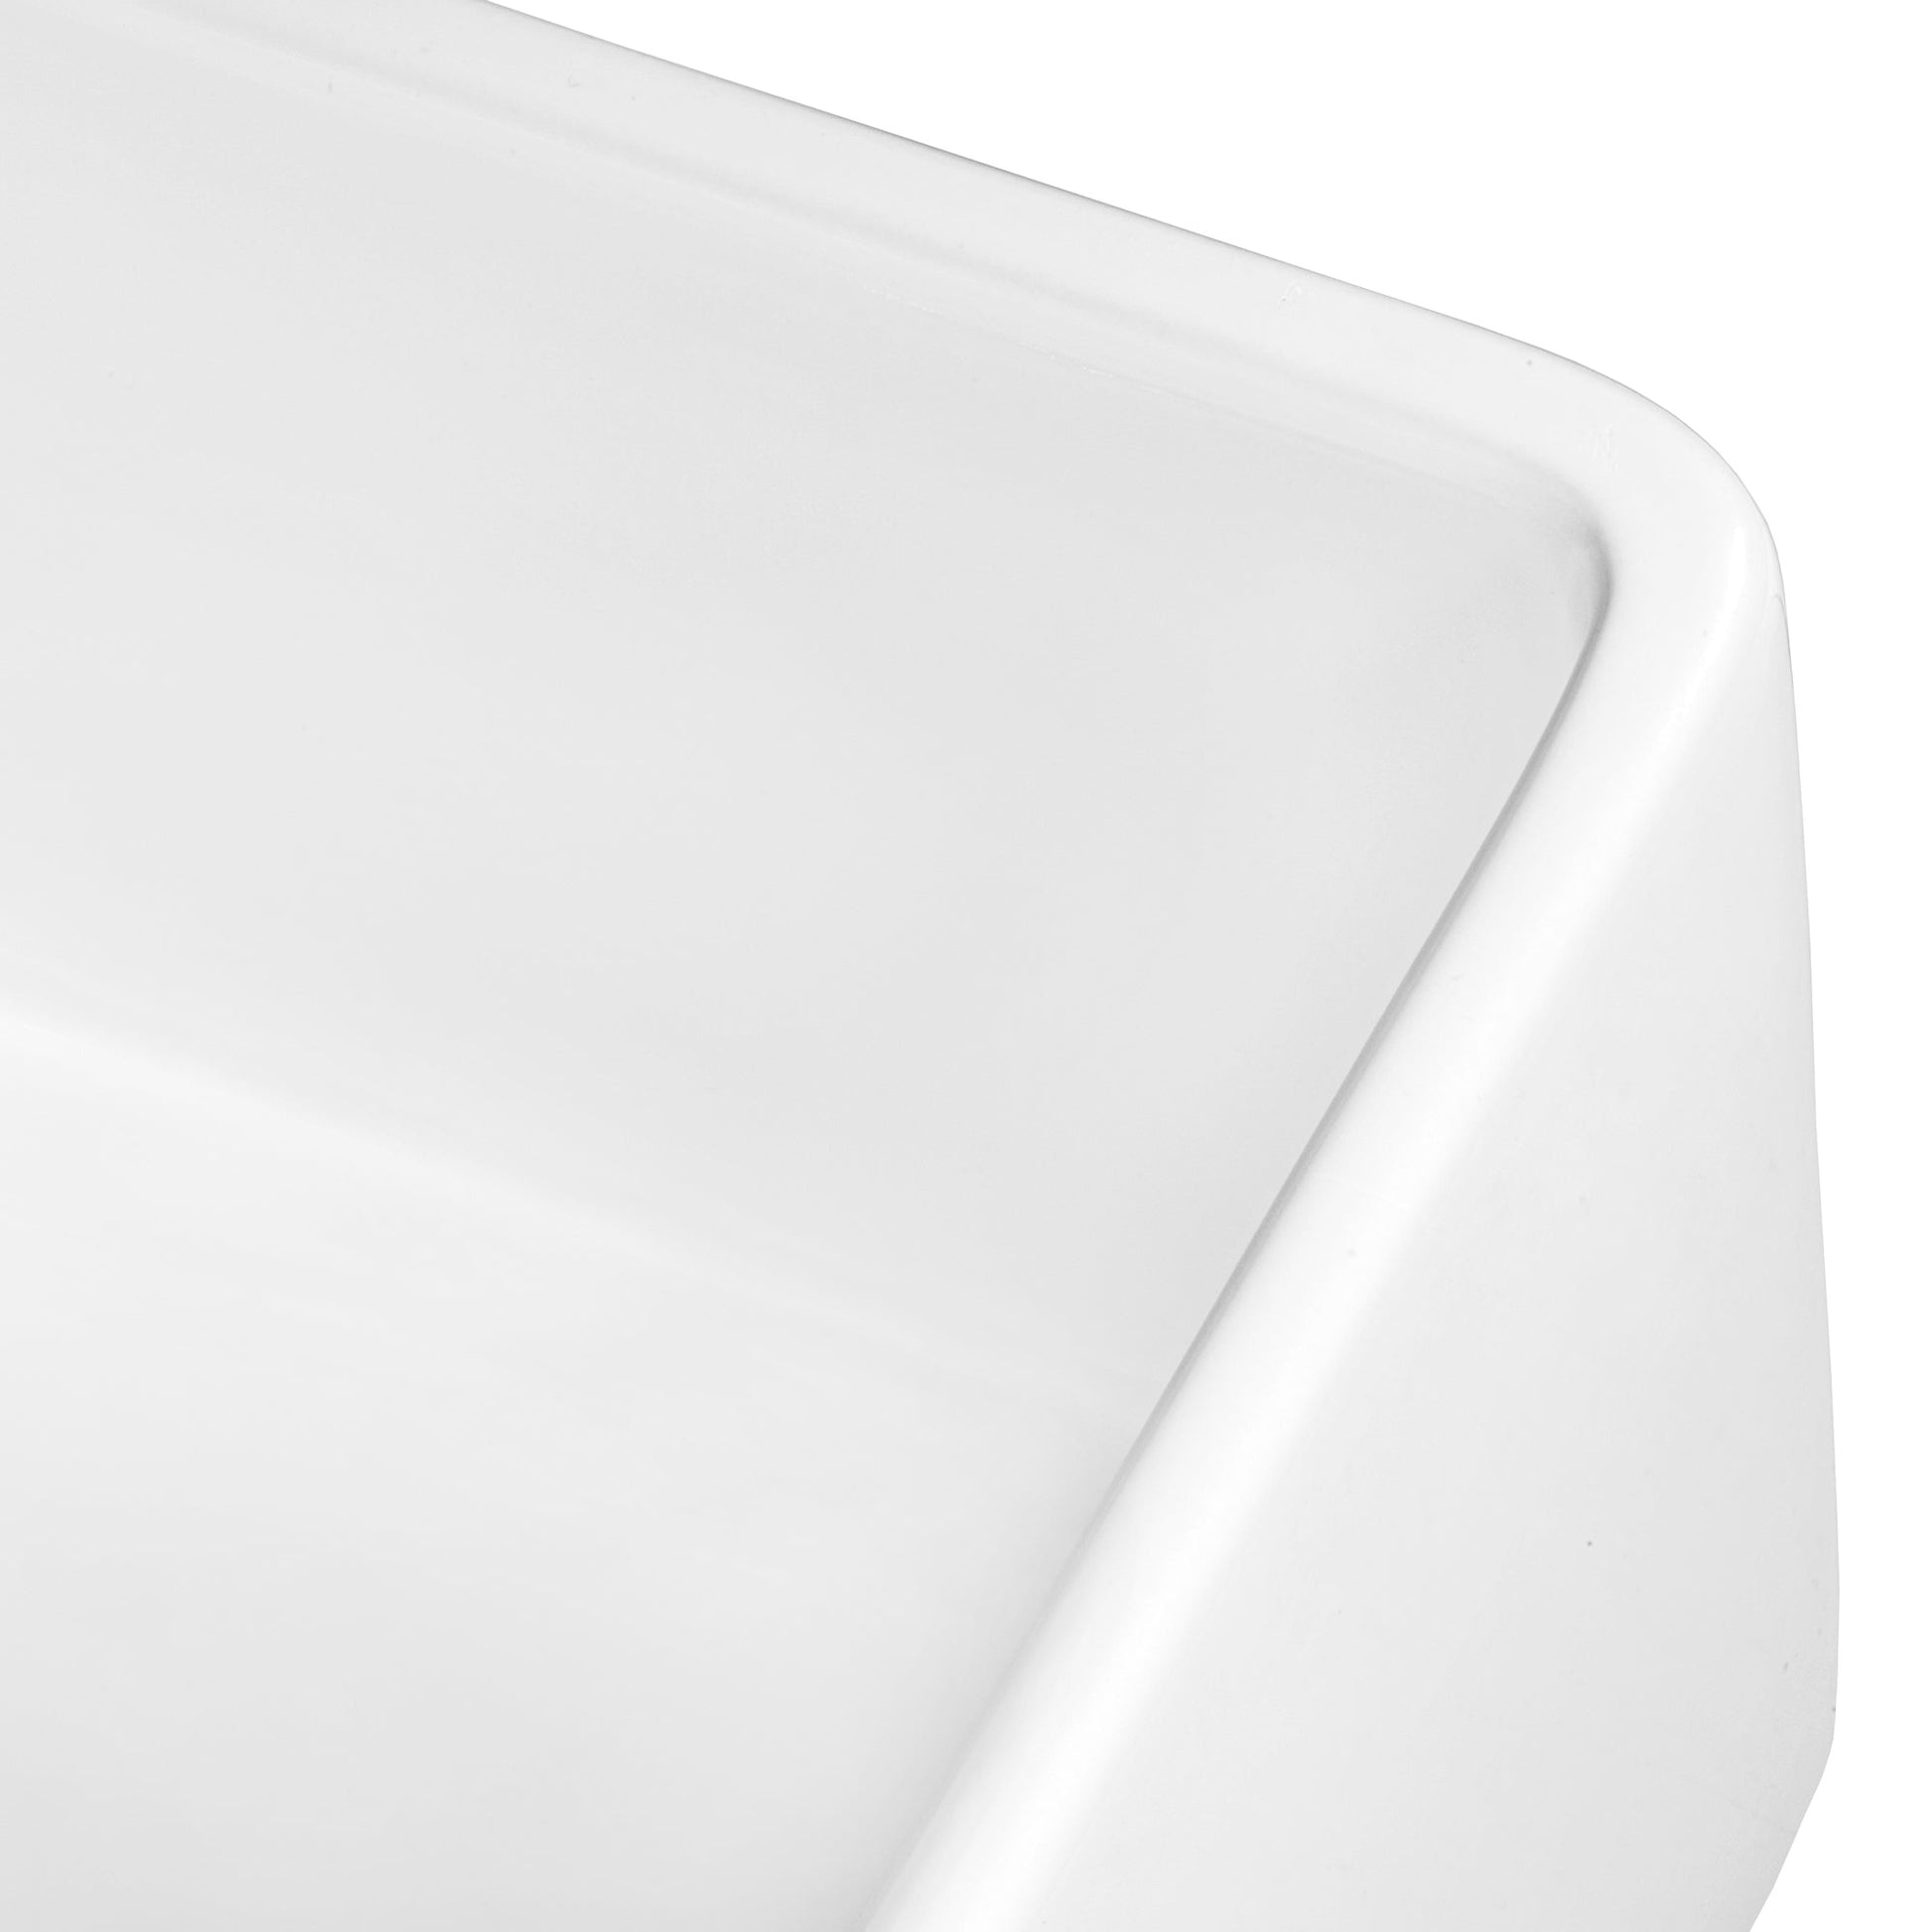 Ruvati Fiamma 30" x 20" White Single Bowl Fireclay Reversible Farmhouse Apron-Front Kitchen Sink